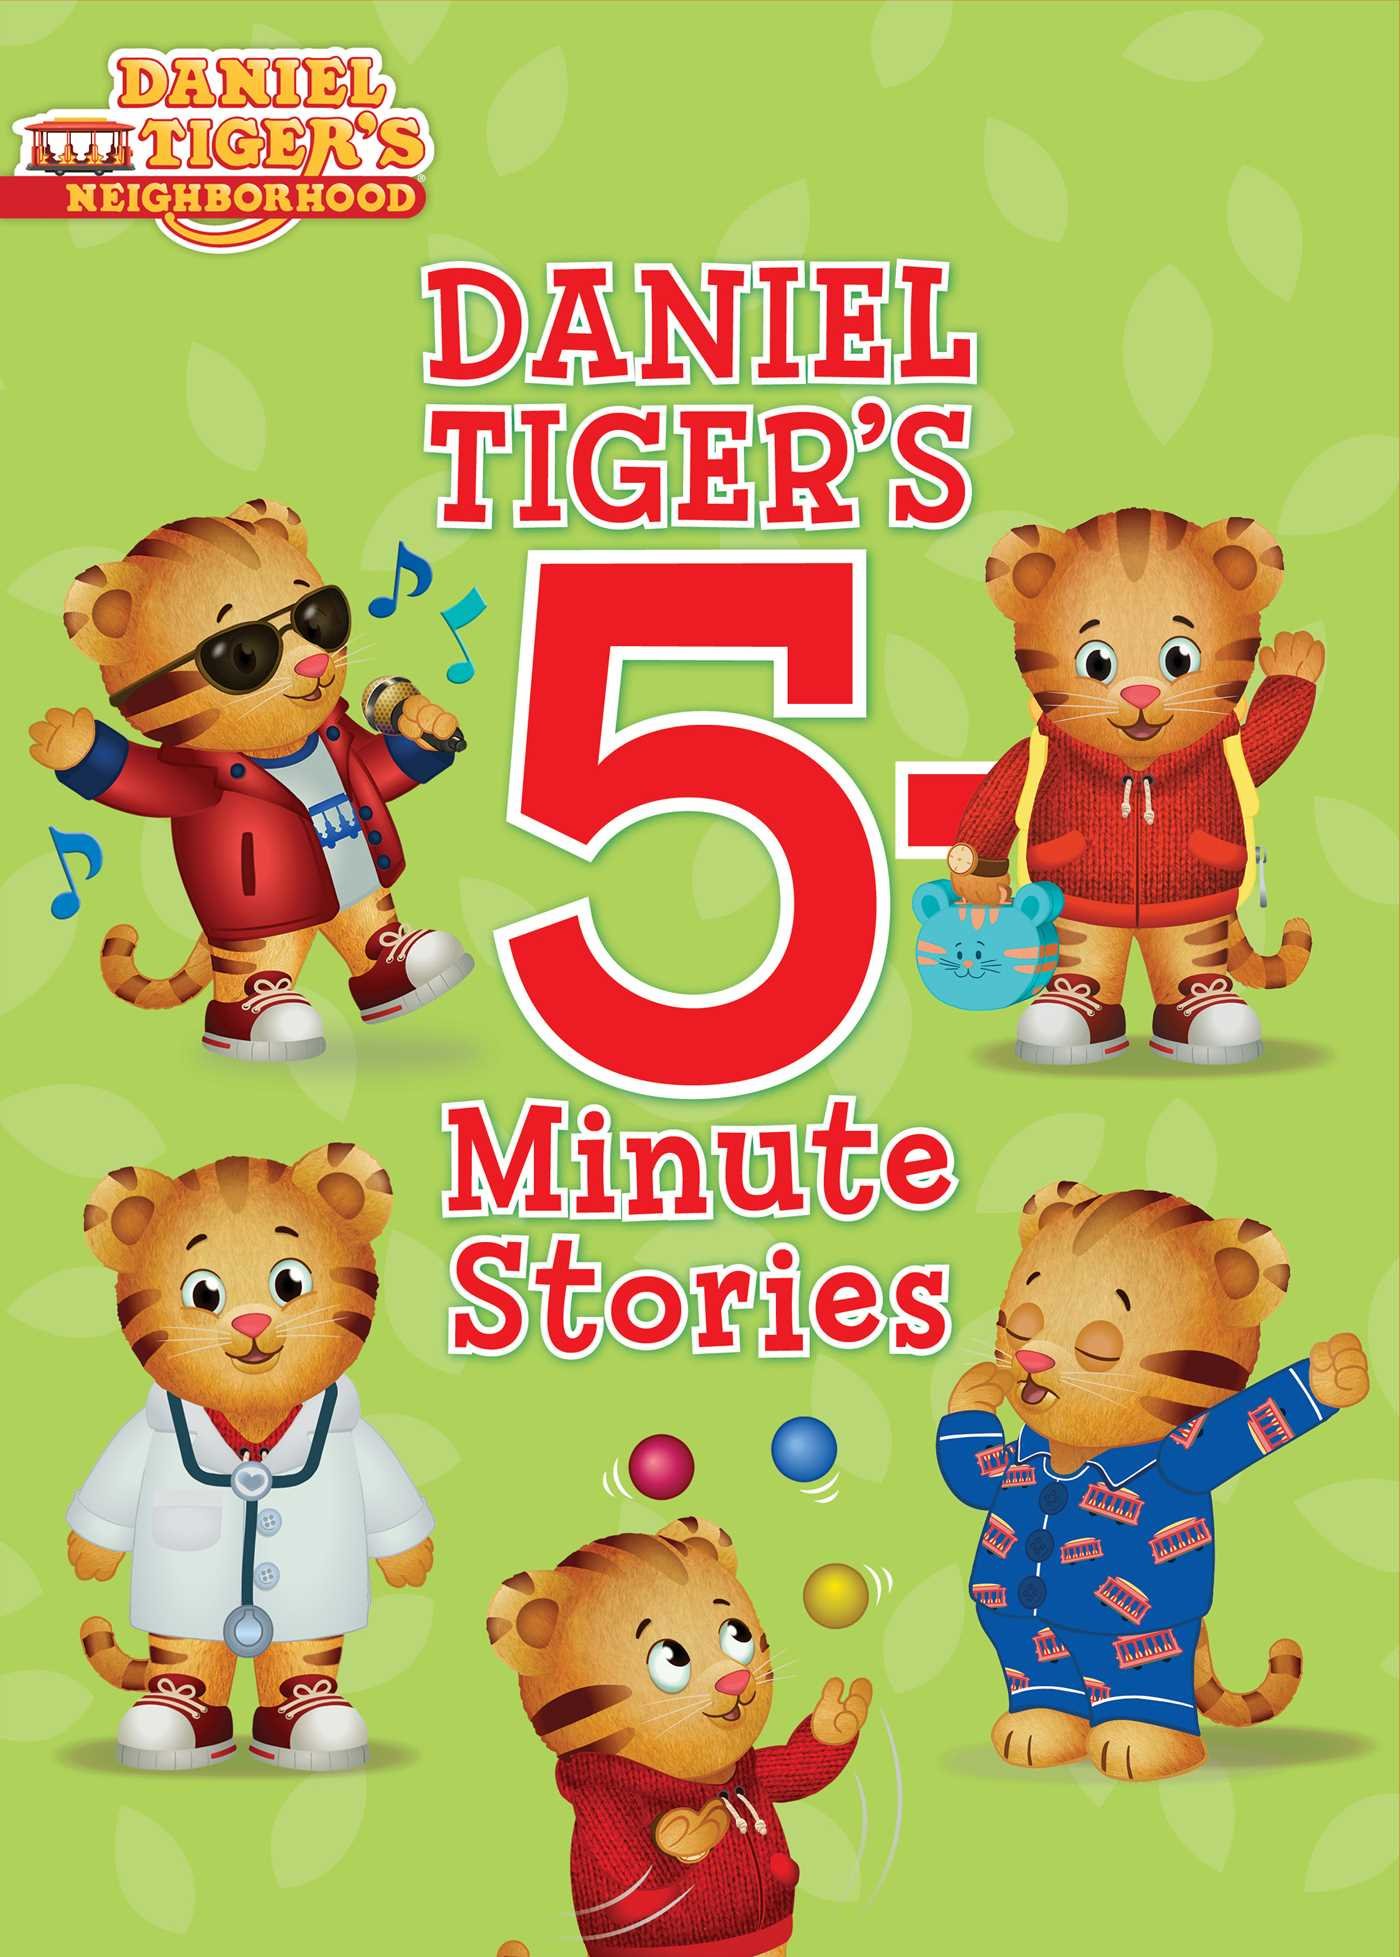 Daniel Tiger's 5-Minute Stories (Daniel Tiger's Neighbourhood)